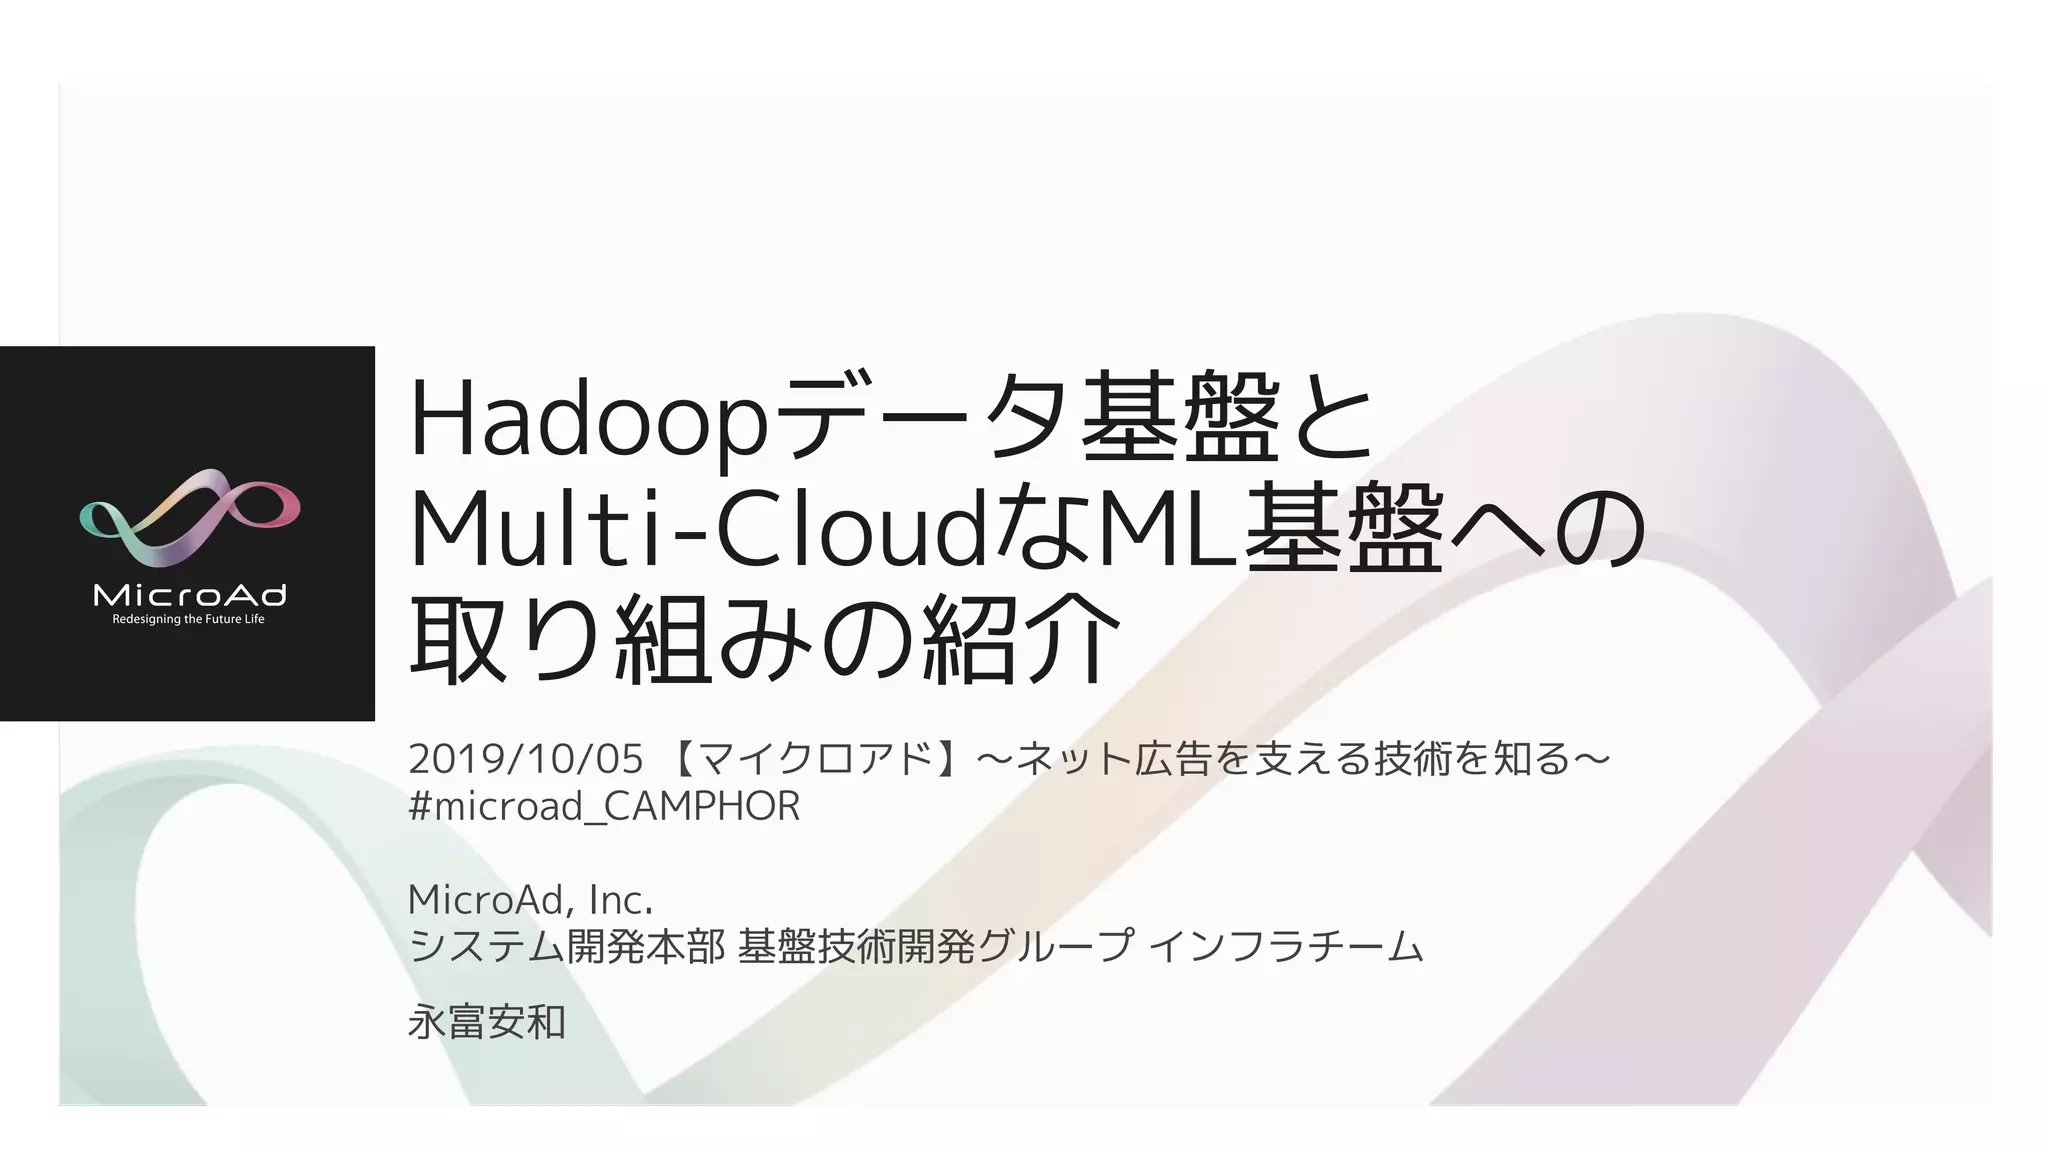 Hadoopデータ基盤とMulti-CloudなML基盤への取り組みの紹介